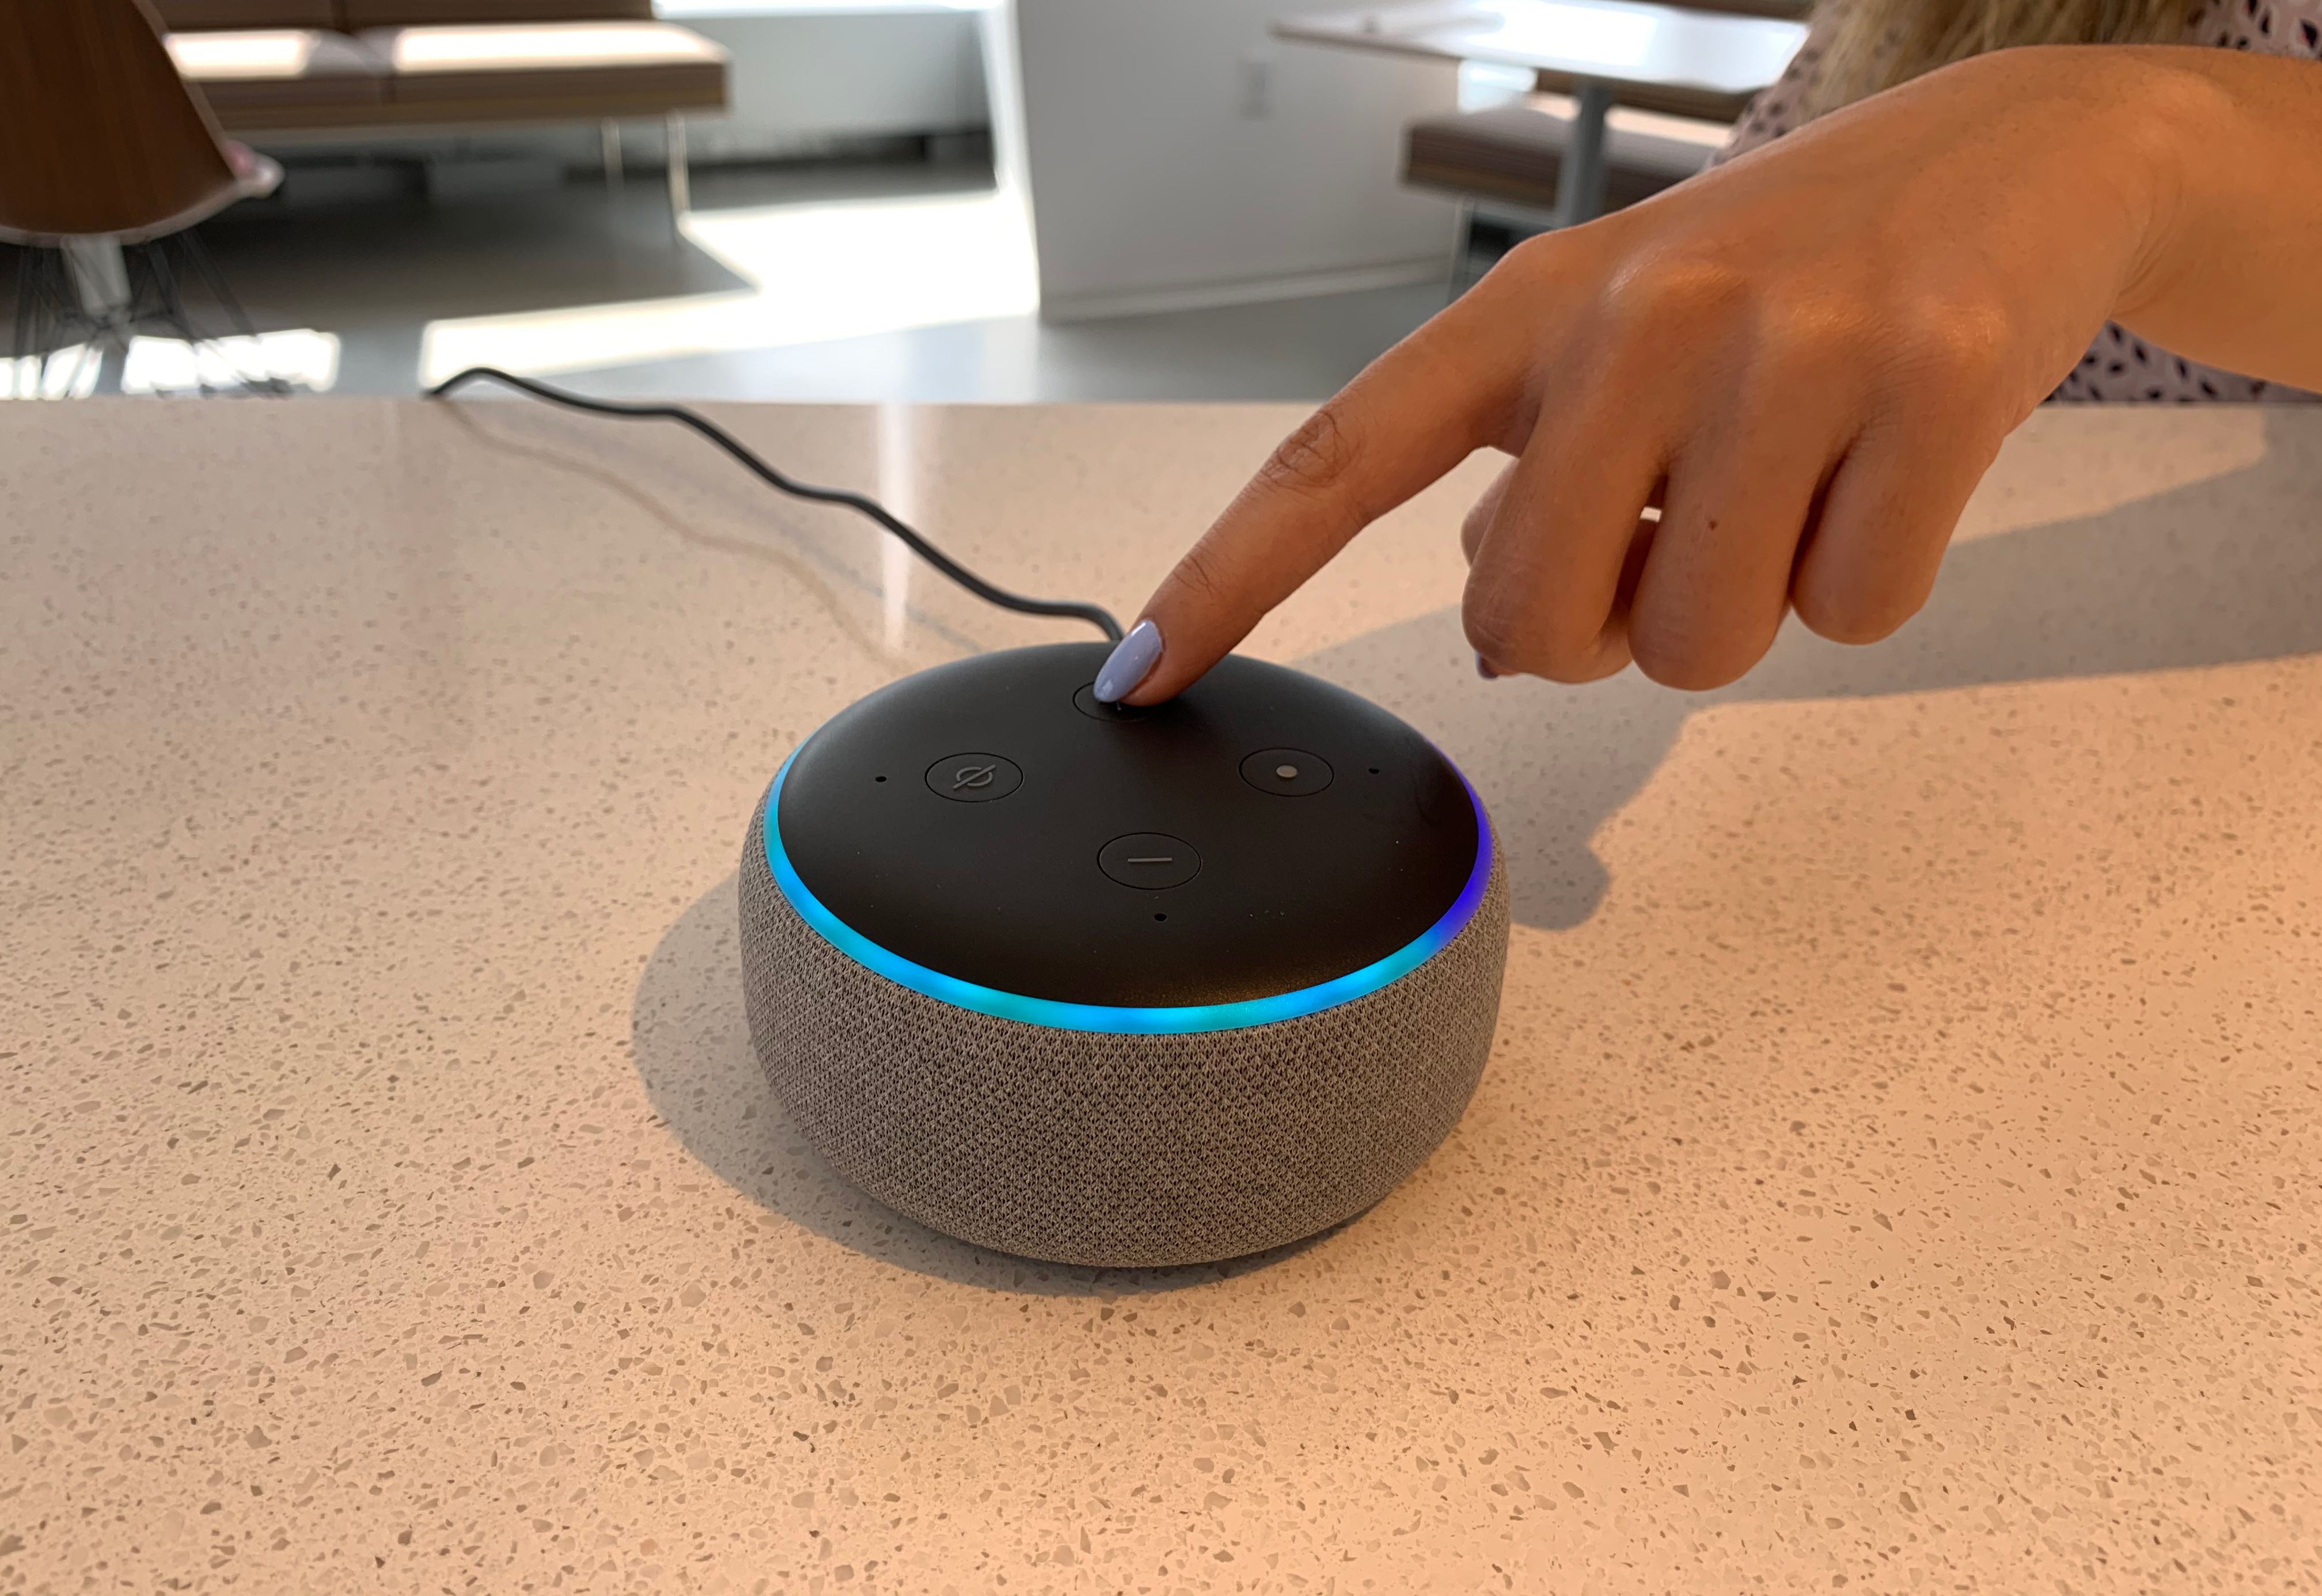 Echo Dot (3rd Generation) - Smart Speaker with Alexa